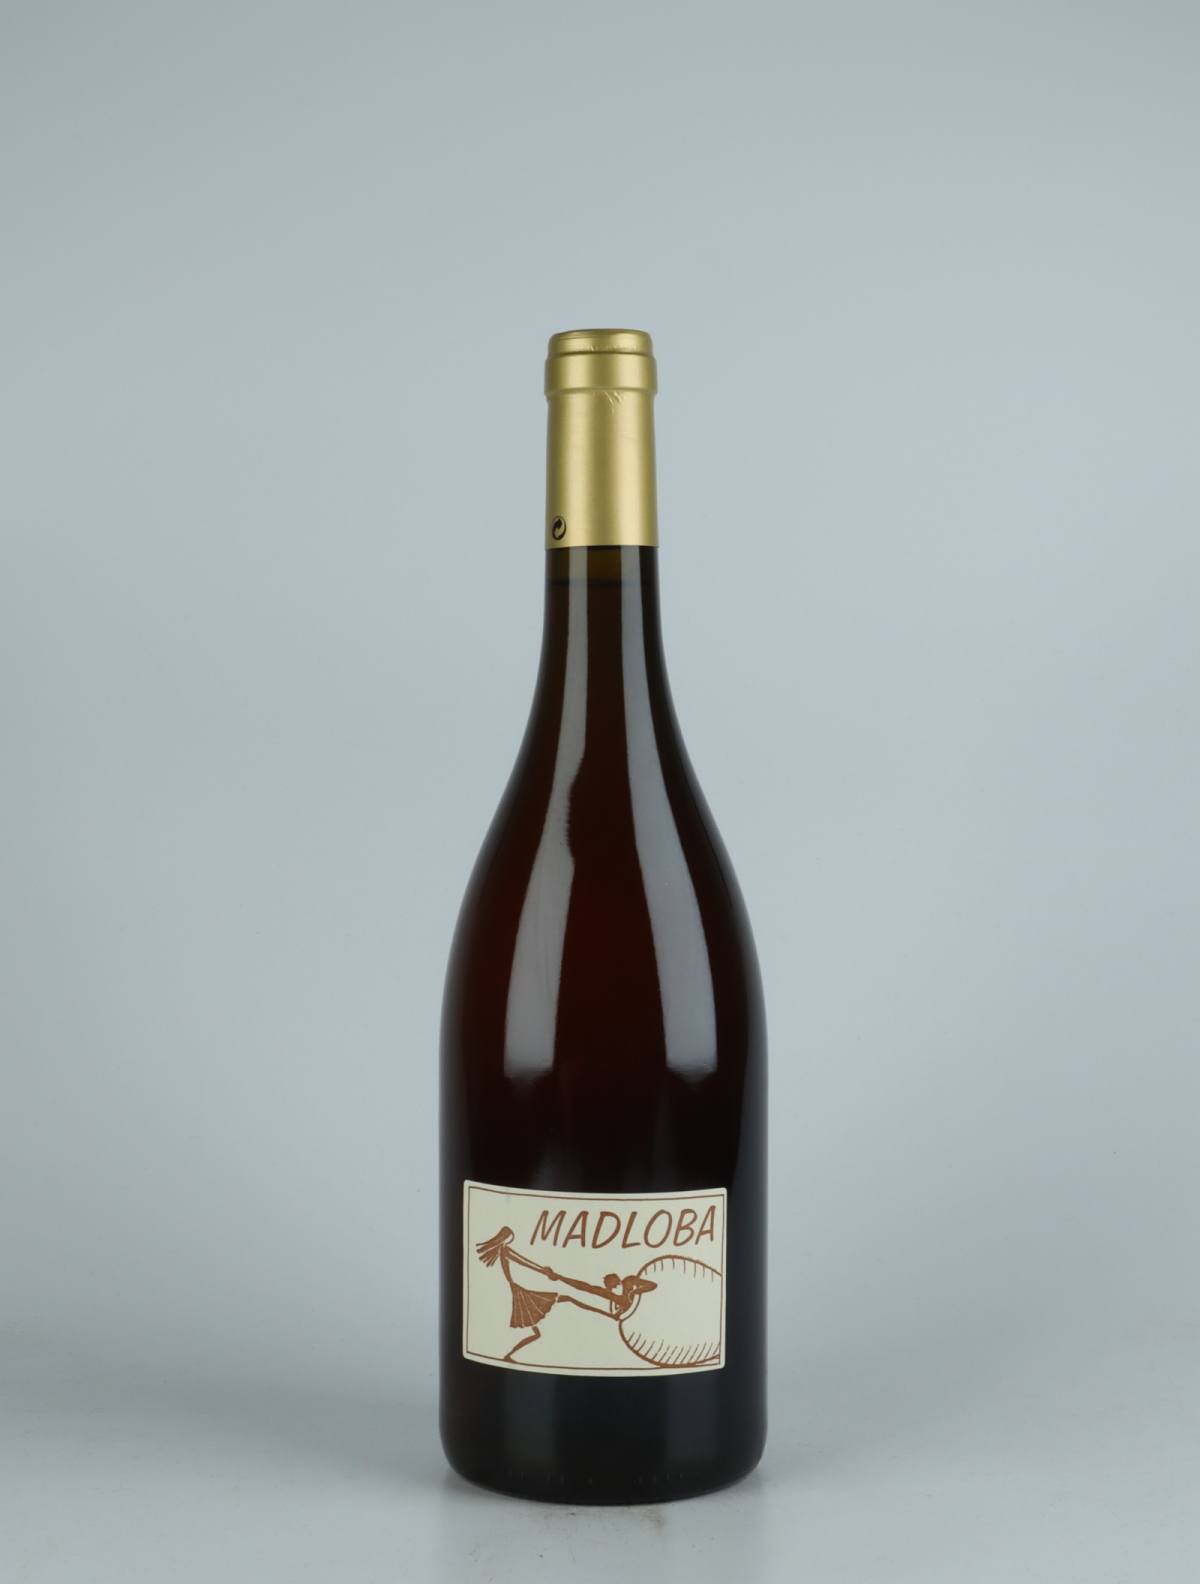 A bottle 2020 Madloba Blanc Orange wine from Domaine des Miquettes, Rhône in France